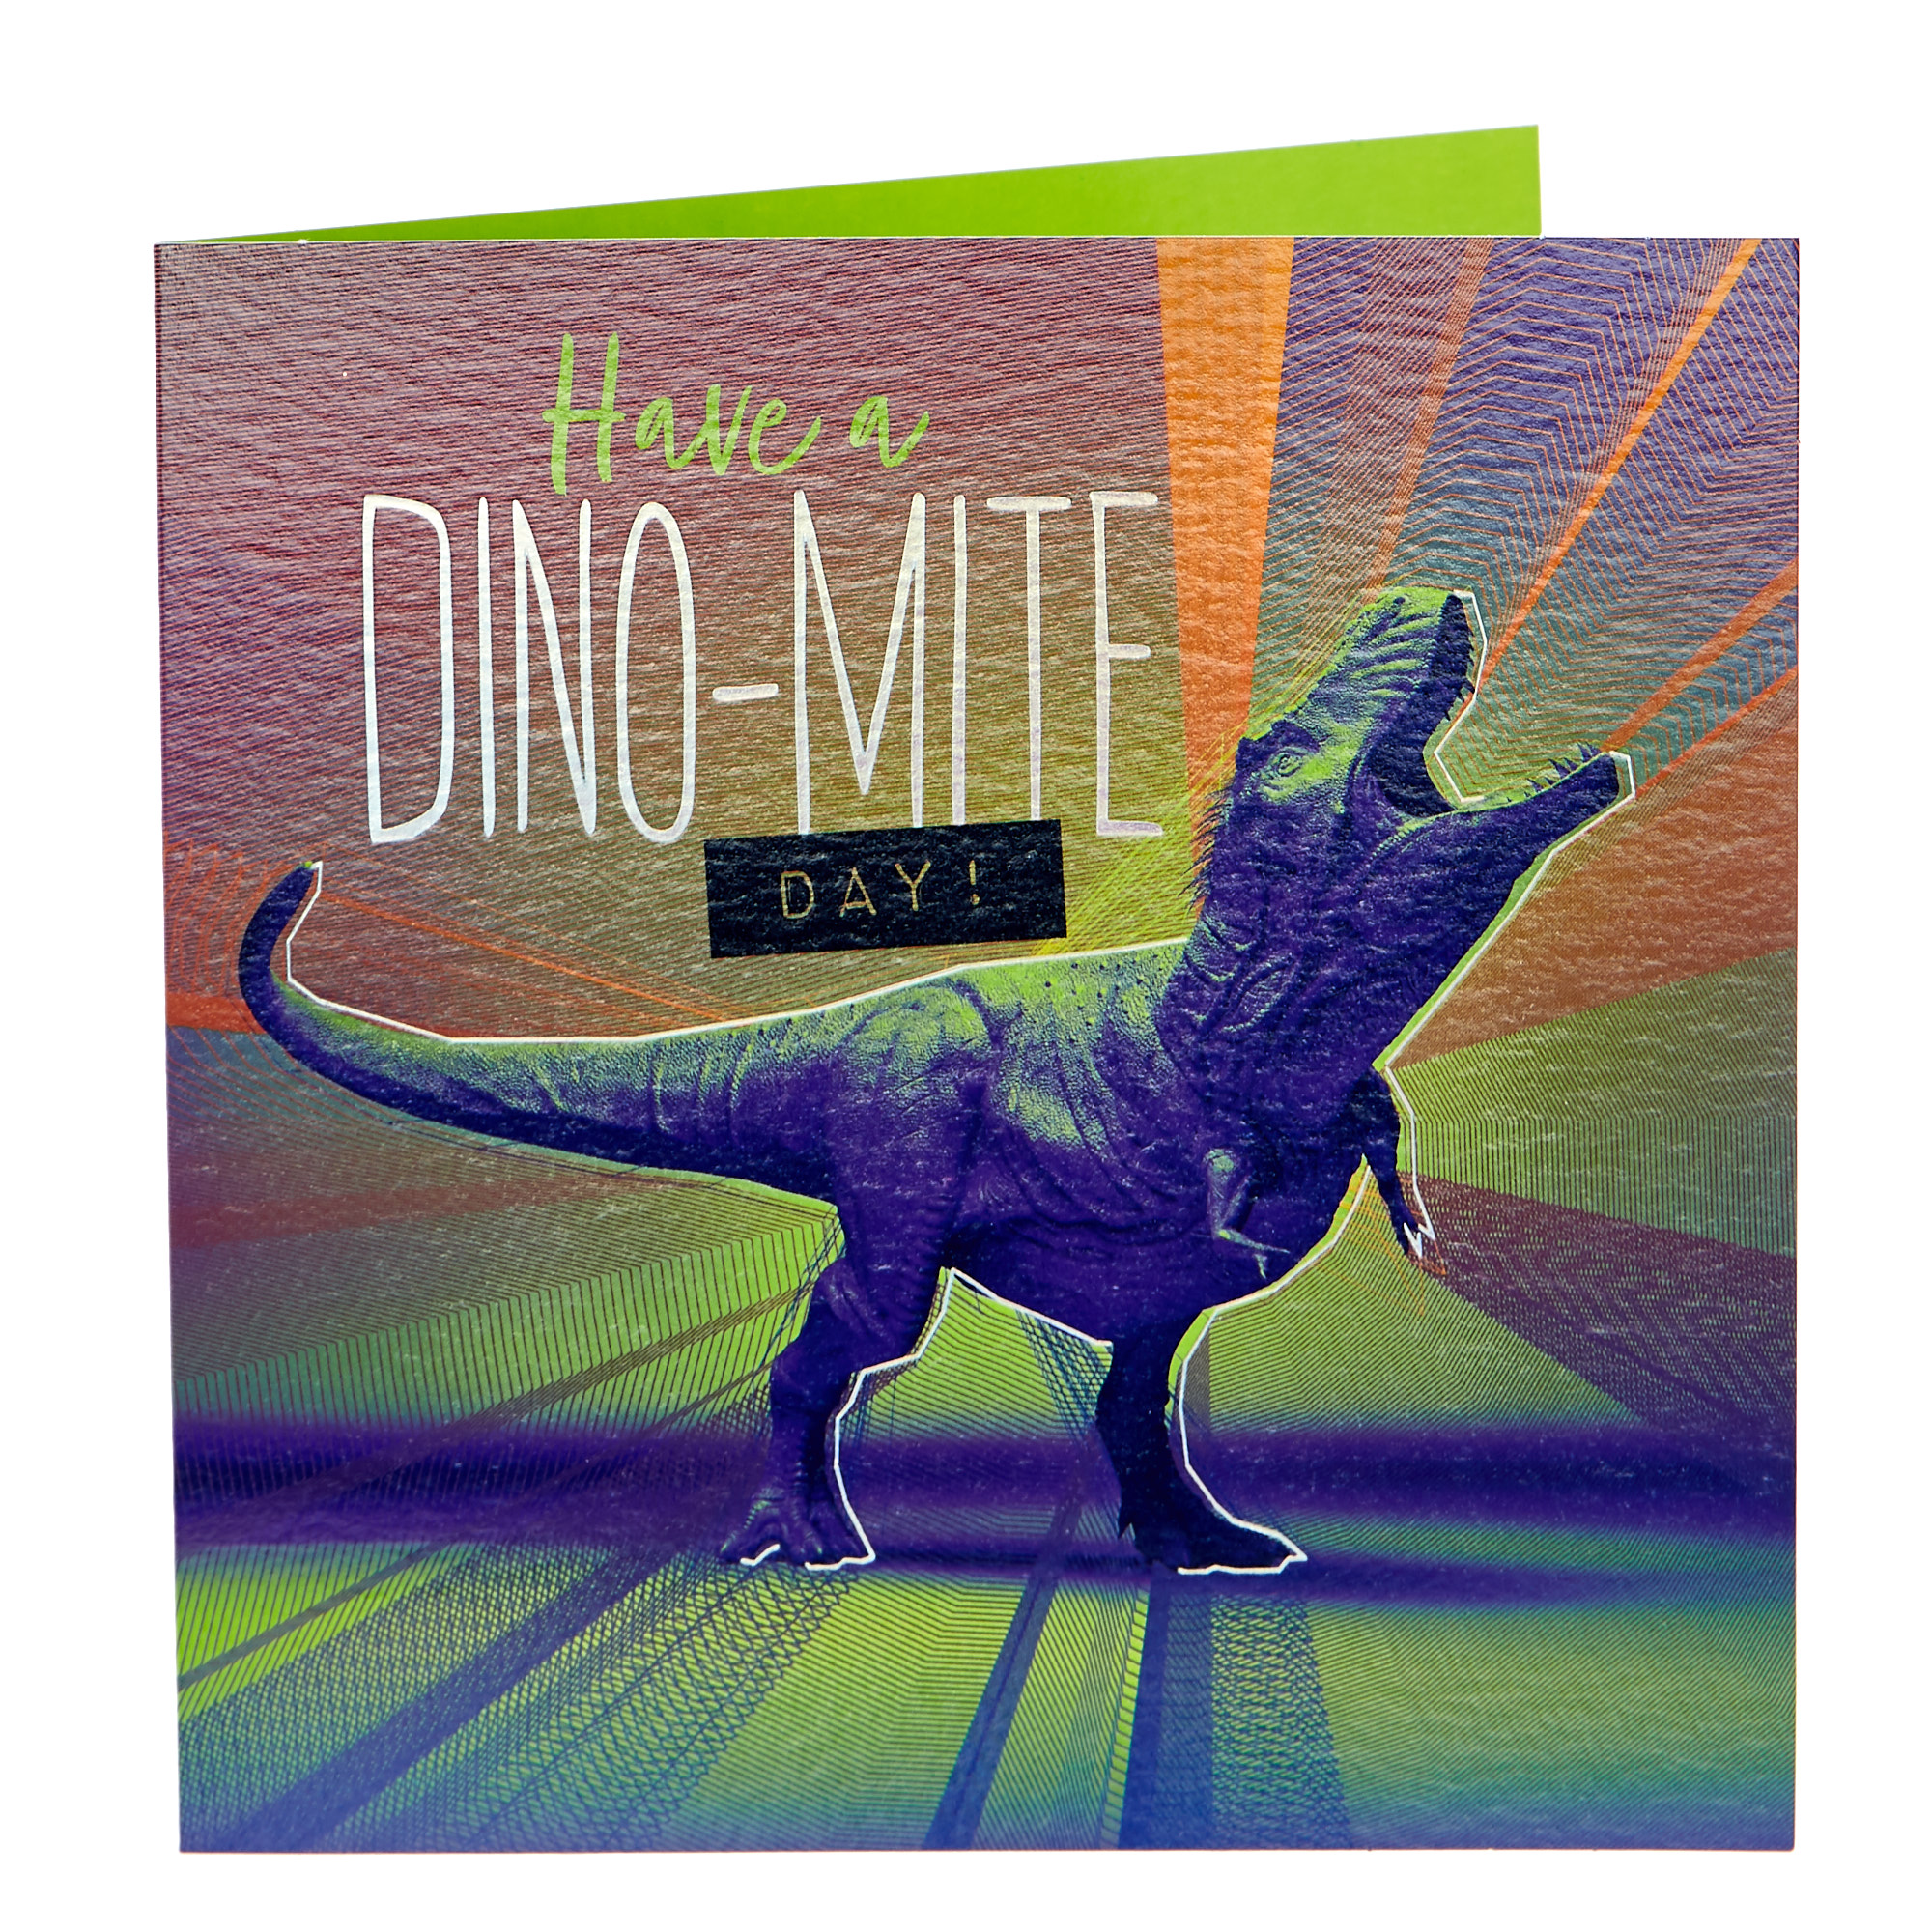 Birthday Card - Dino-mite Day